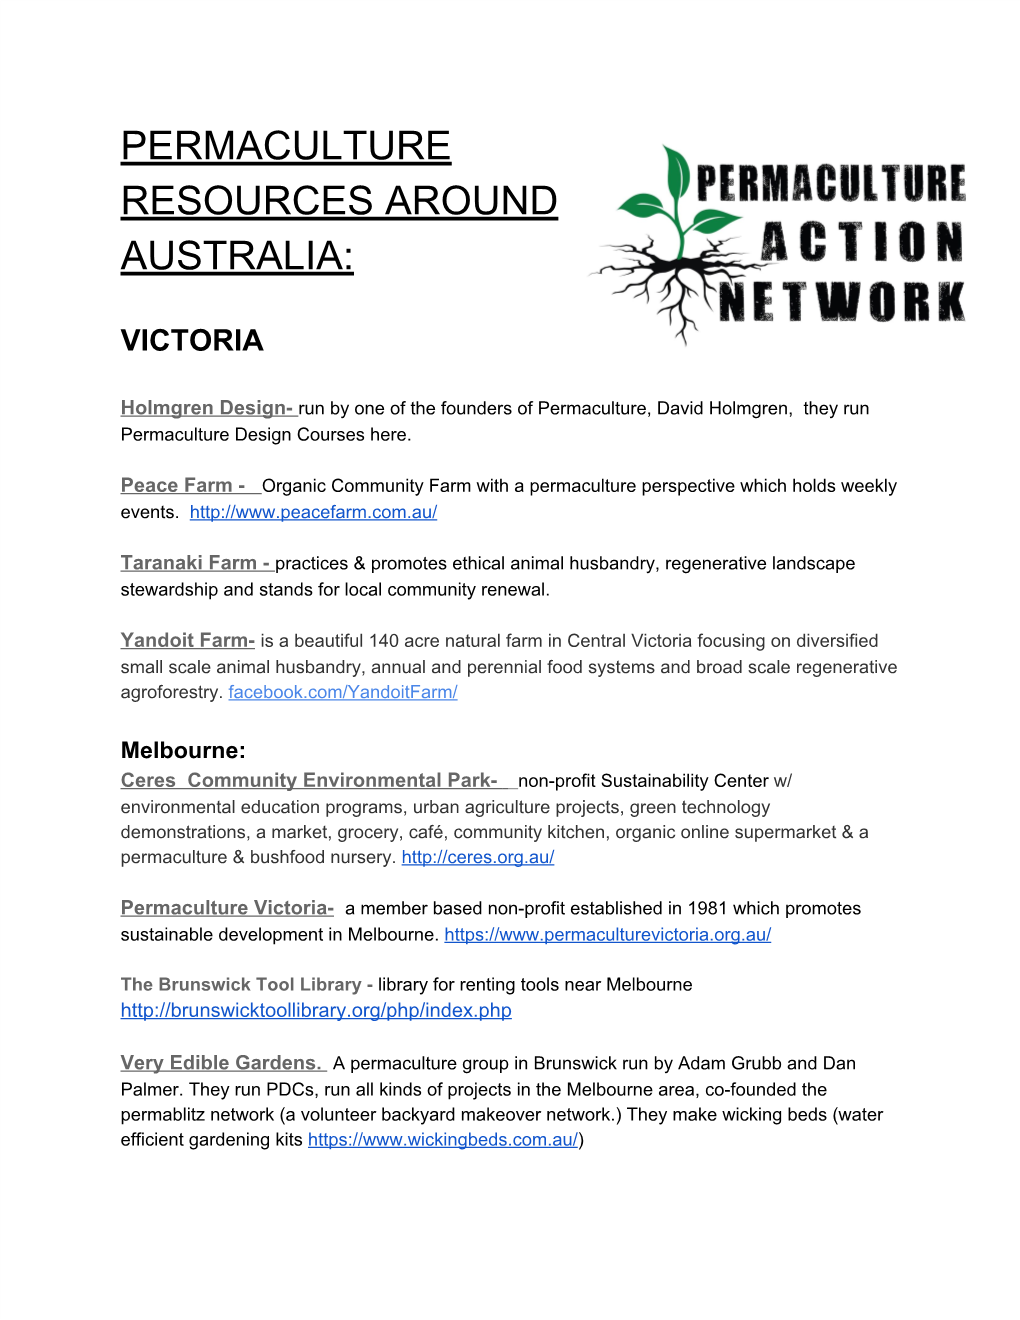 Permaculture Resources Around Australia